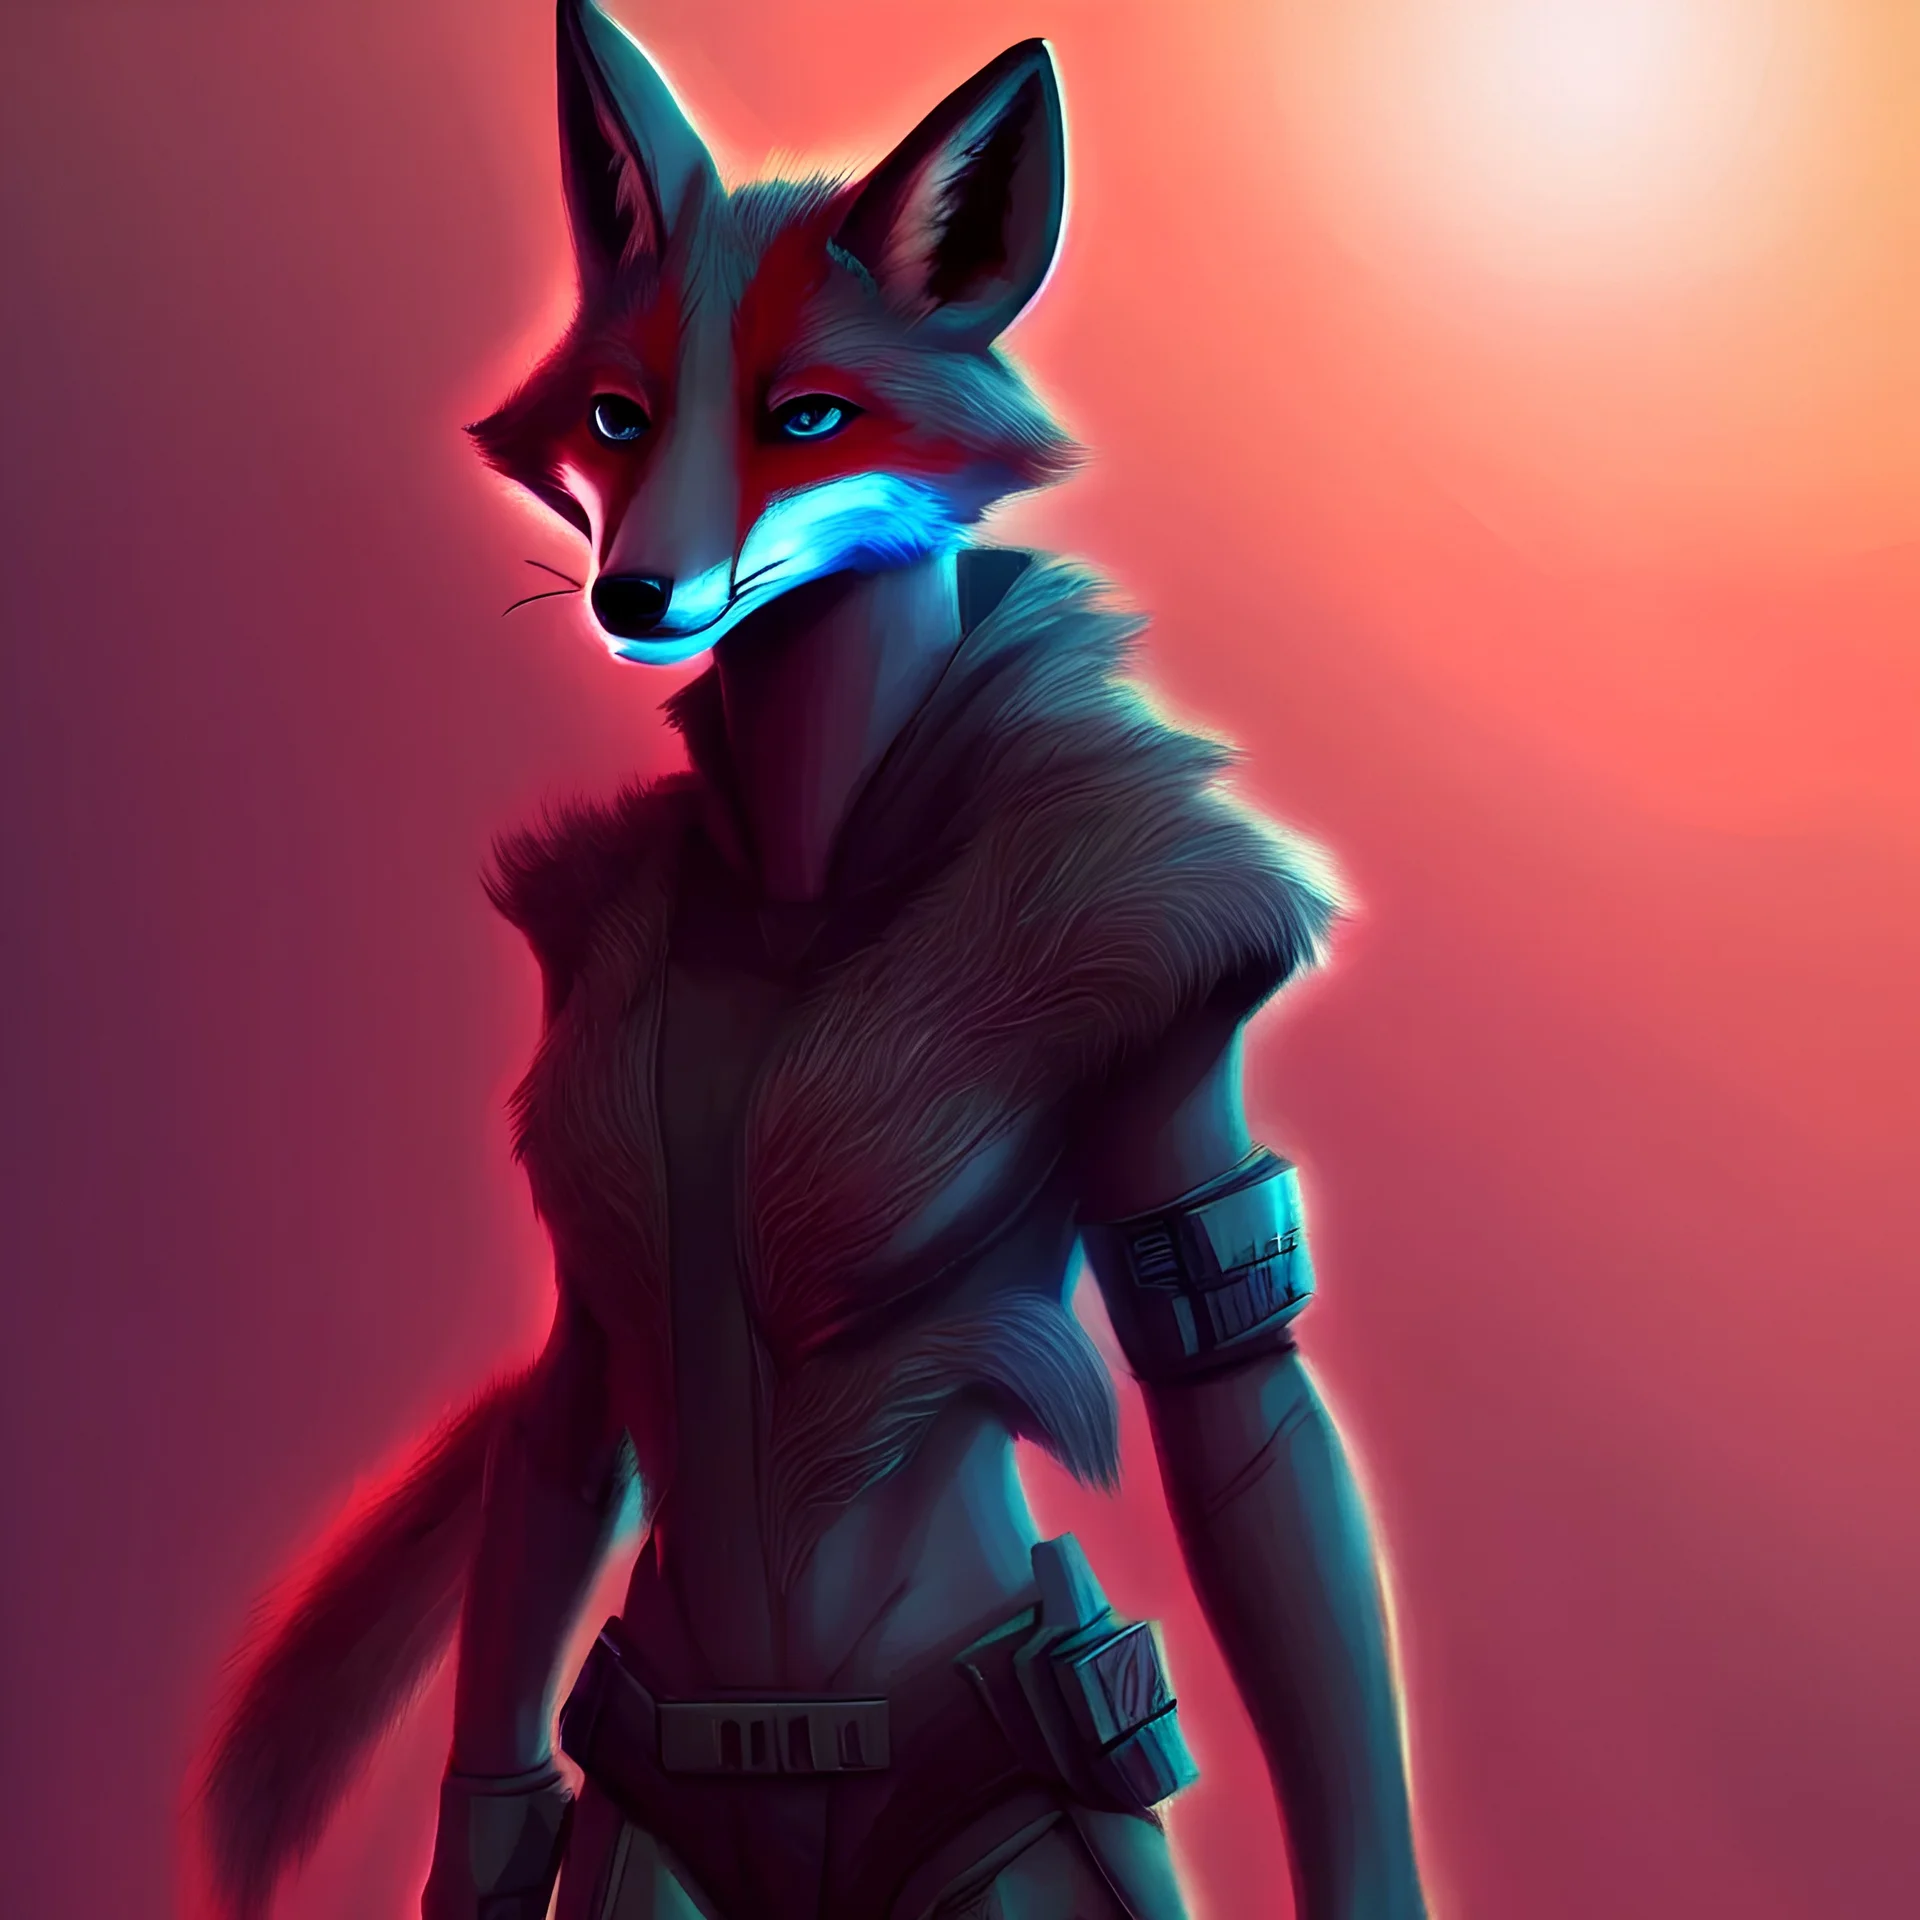 A fox fursona, Trending on artstation, Furry art, Digital art, Cyberpunk, High quality, Backlighting